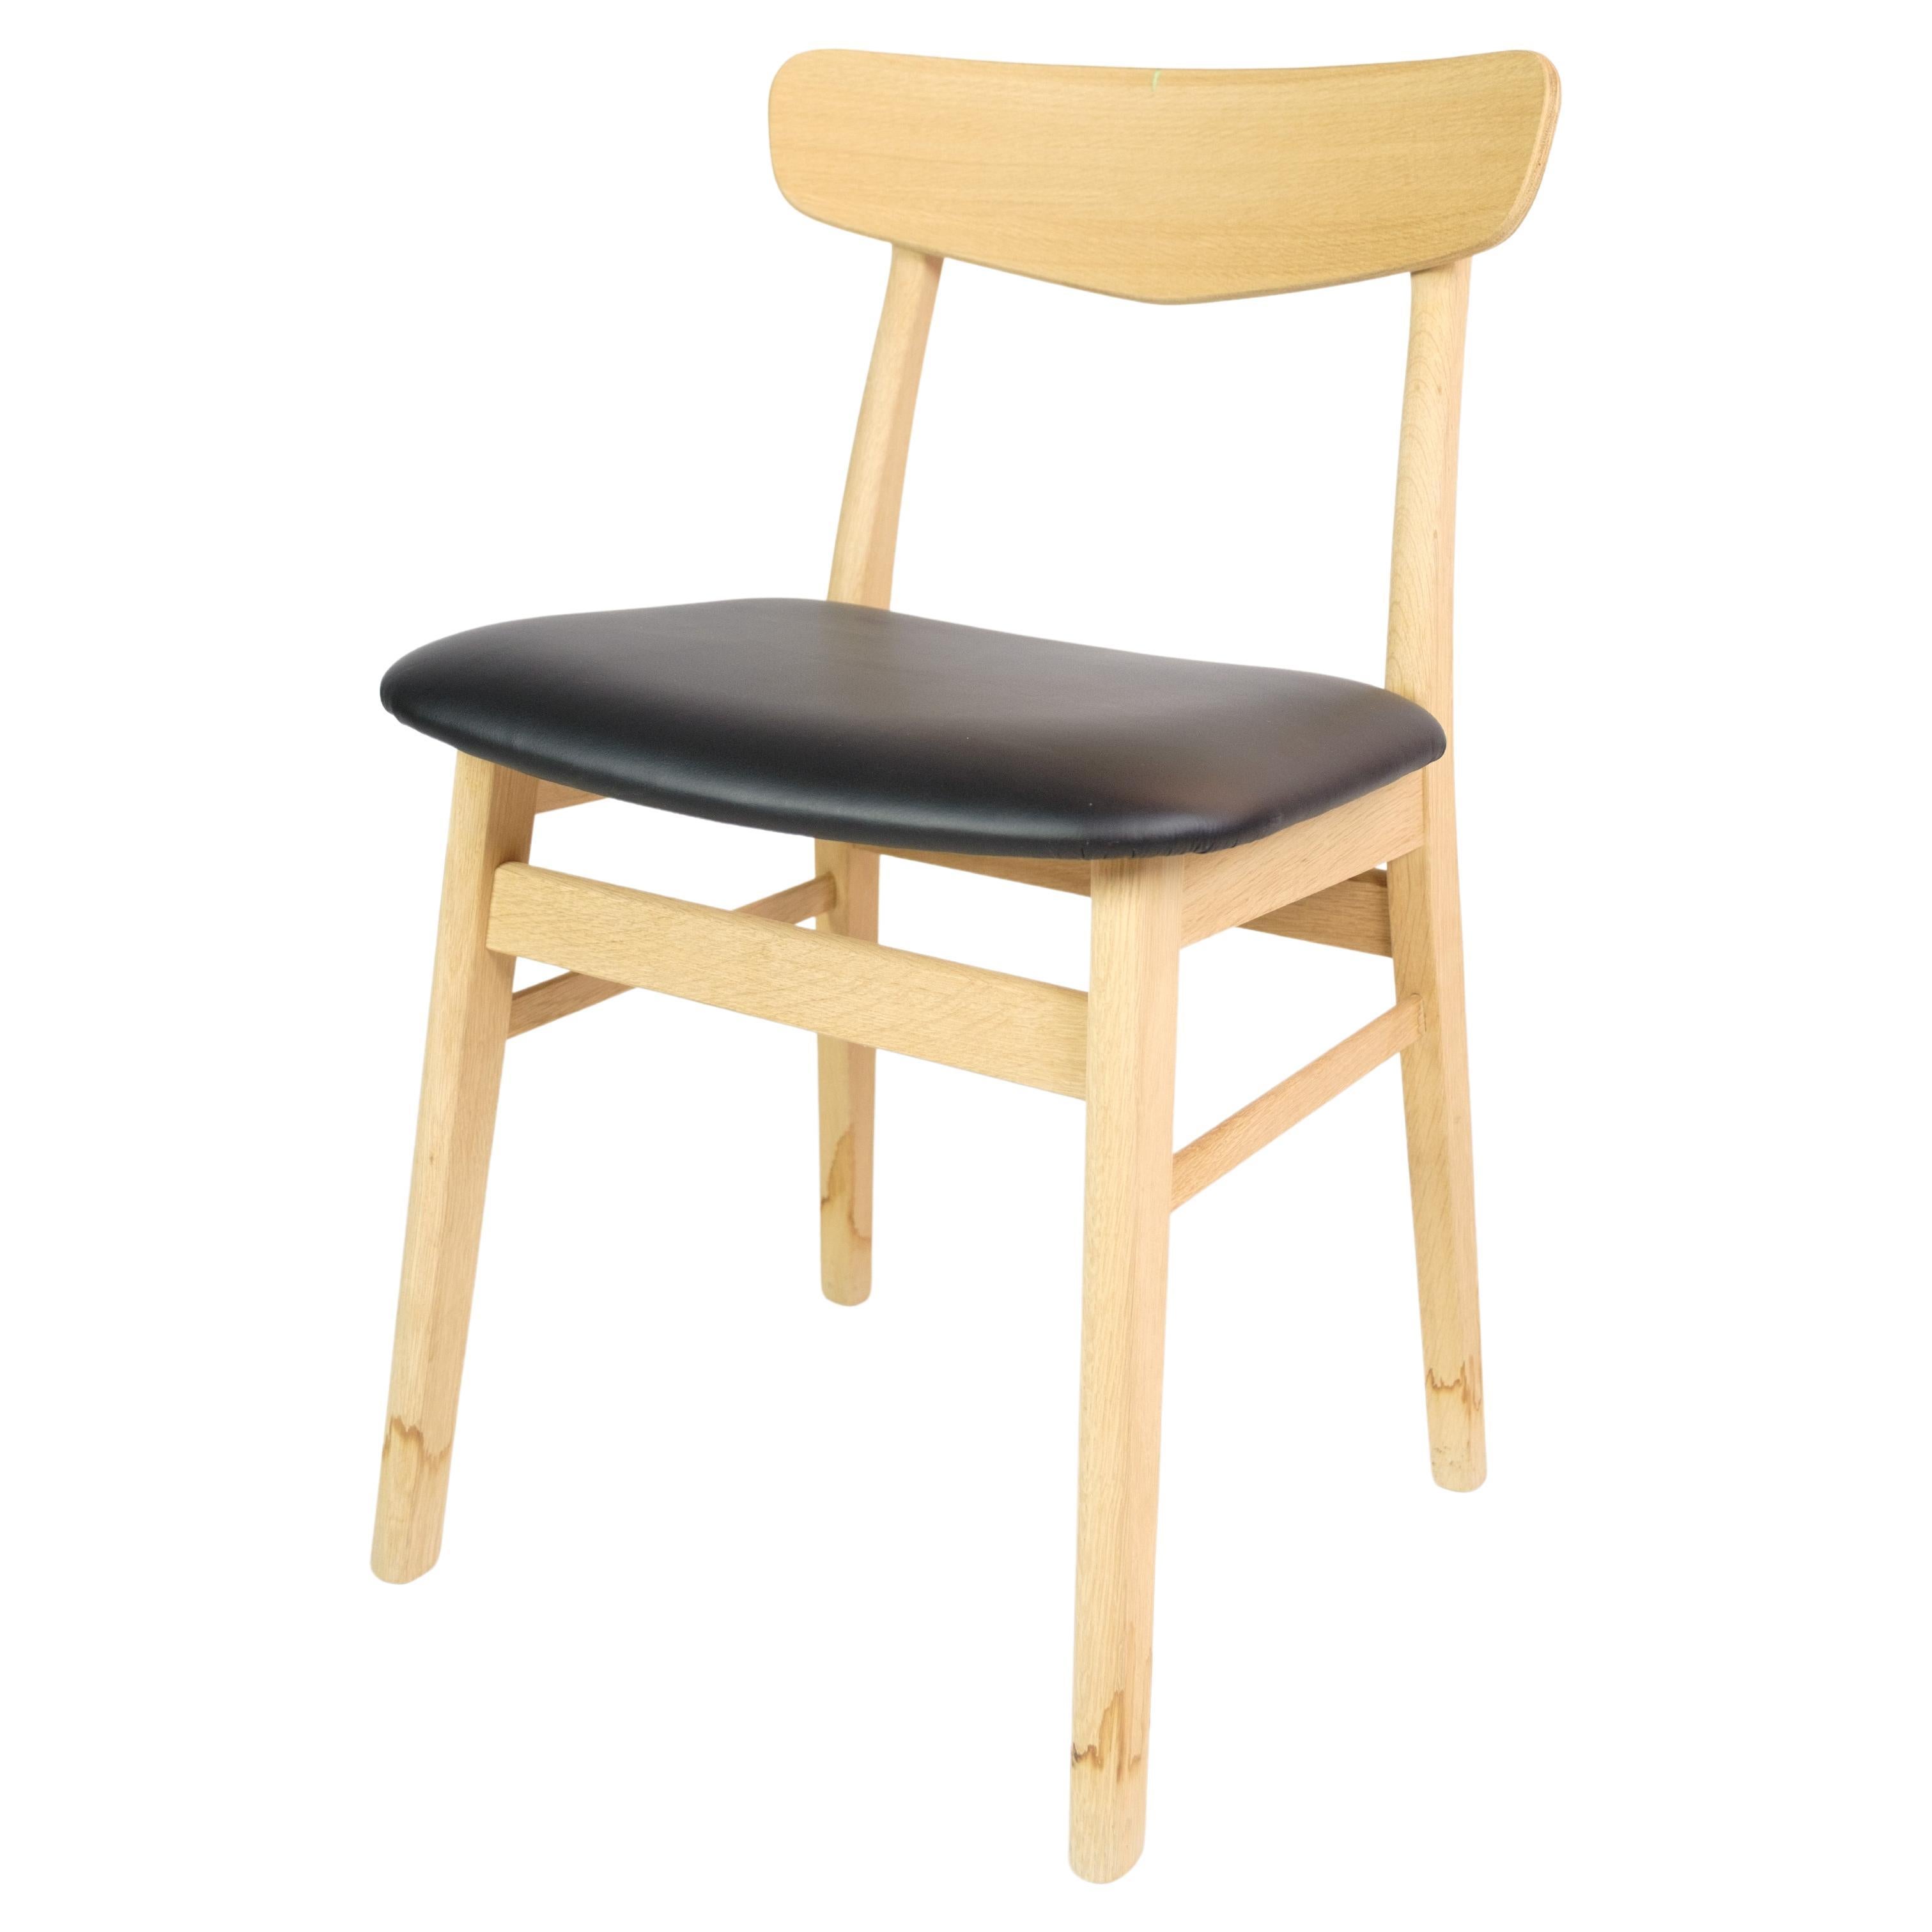 Chair by Findahl by Hammel Mosbøl, Black leather, Oak, 1962